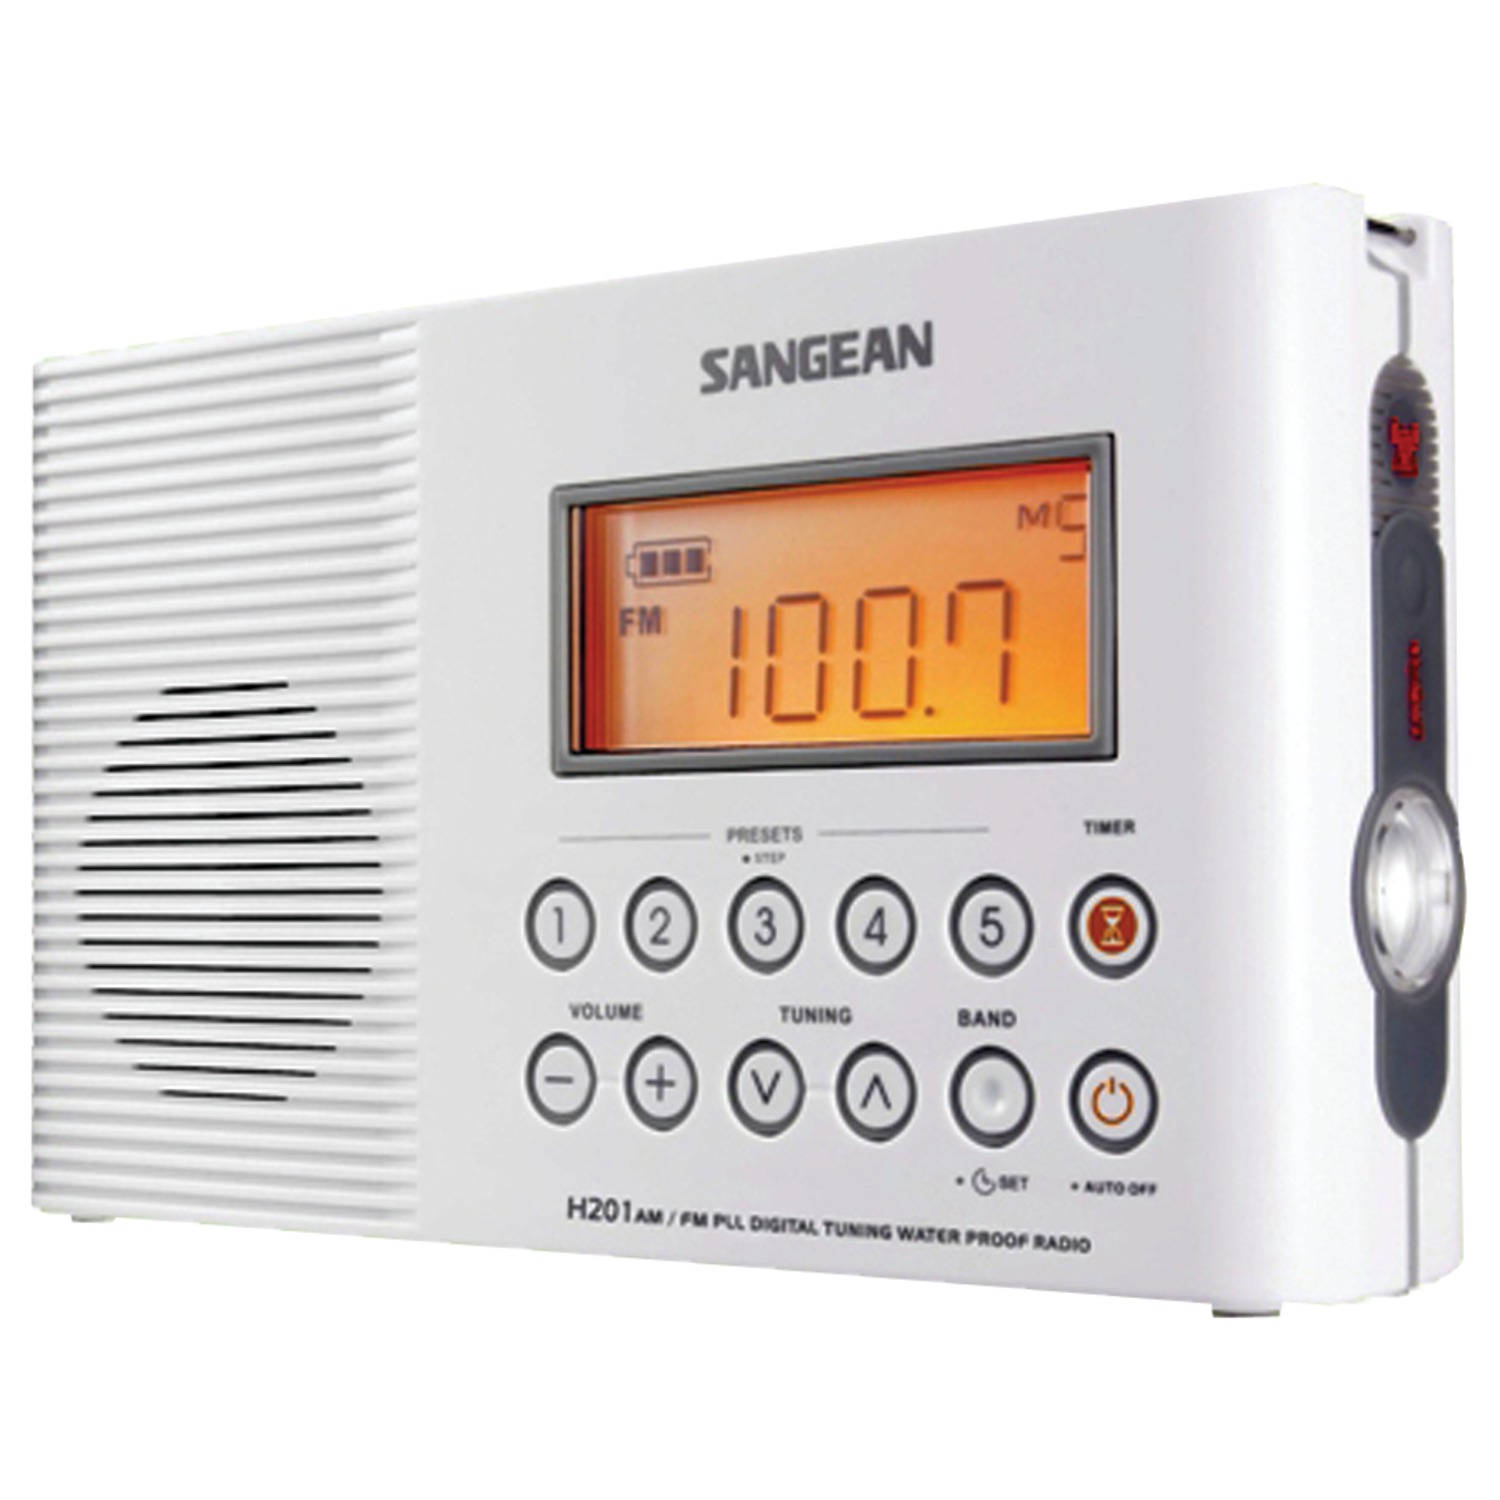 Sangean Portable AM/FM Radio, White, H201 - image 1 of 5